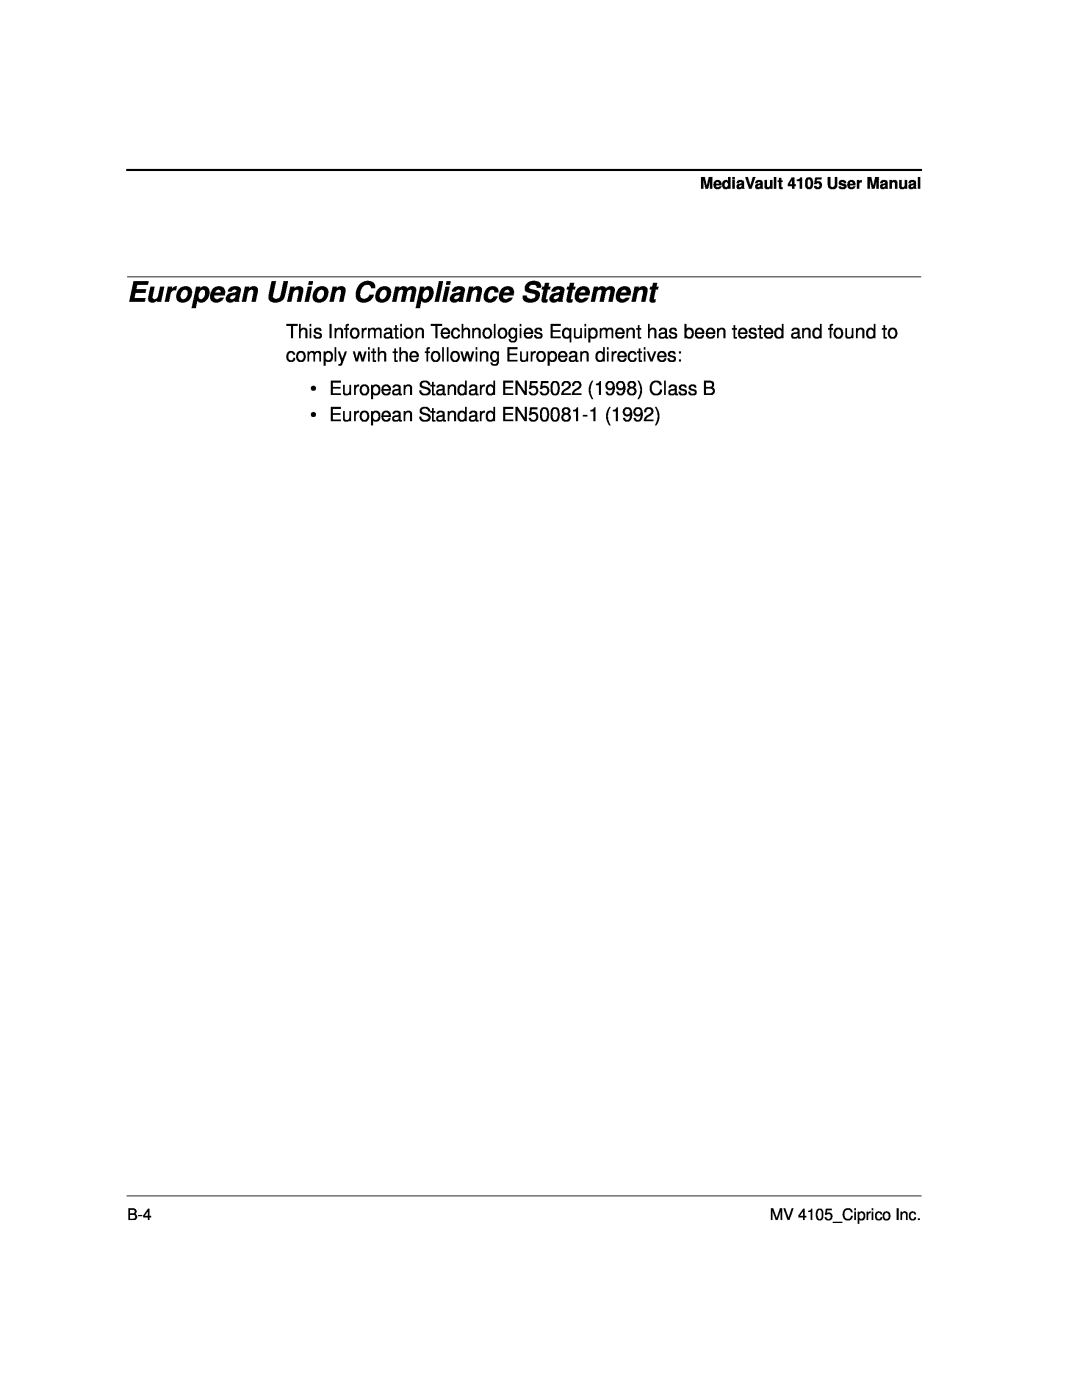 Ciprico 4105 Series user manual European Union Compliance Statement 